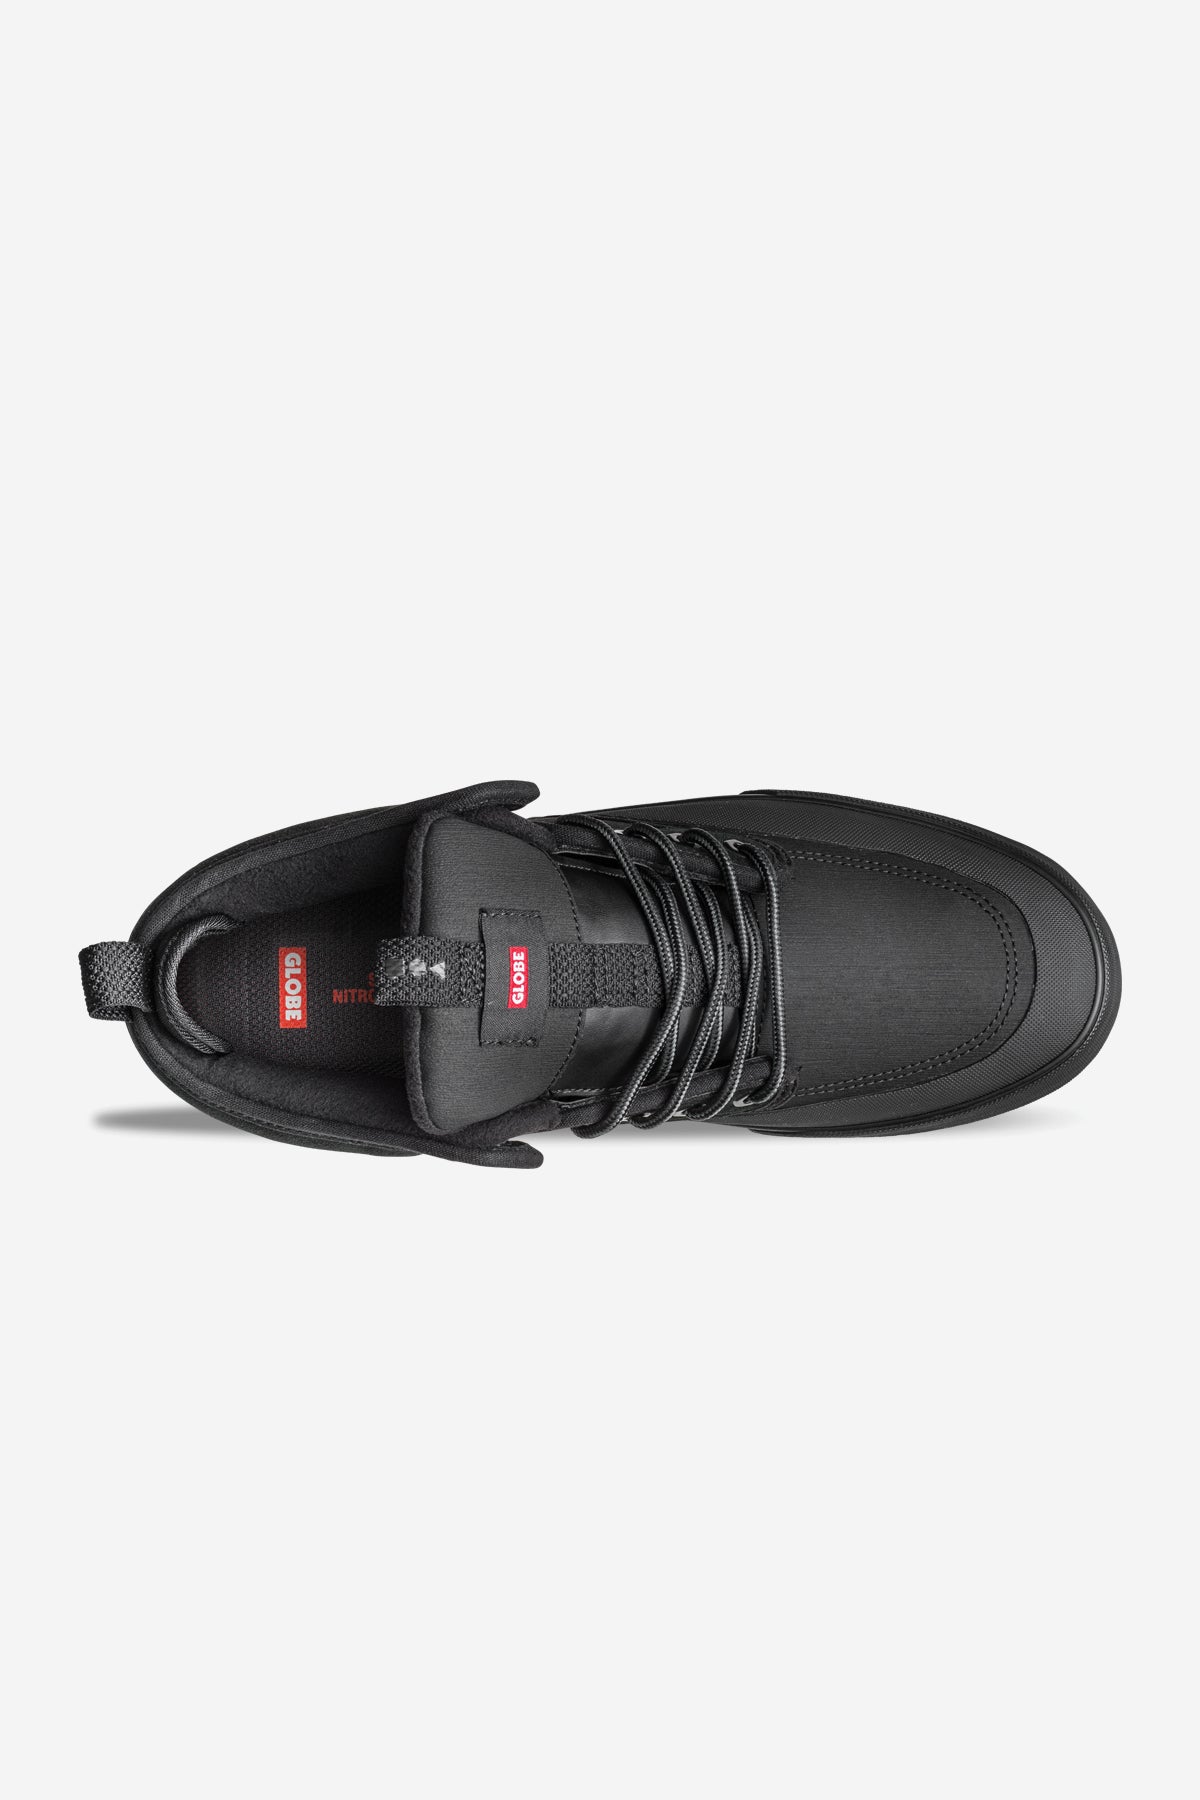 motley mid black black summit skate shoes